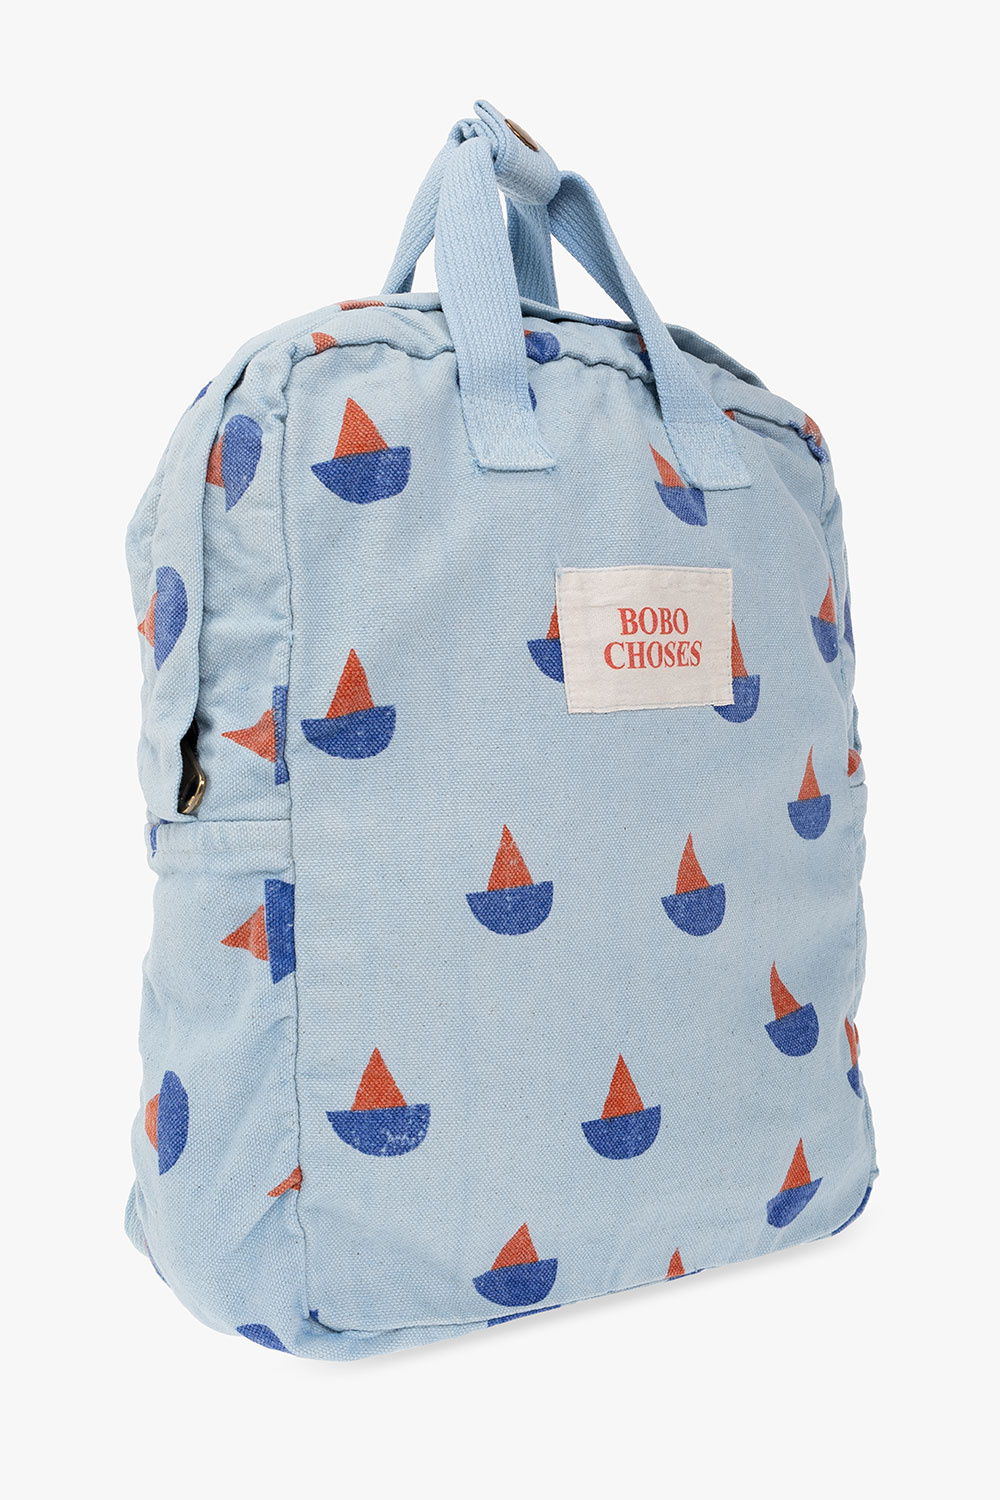 Blue Backpack with logo Bobo Choses - IetpShops Spain - Kurt